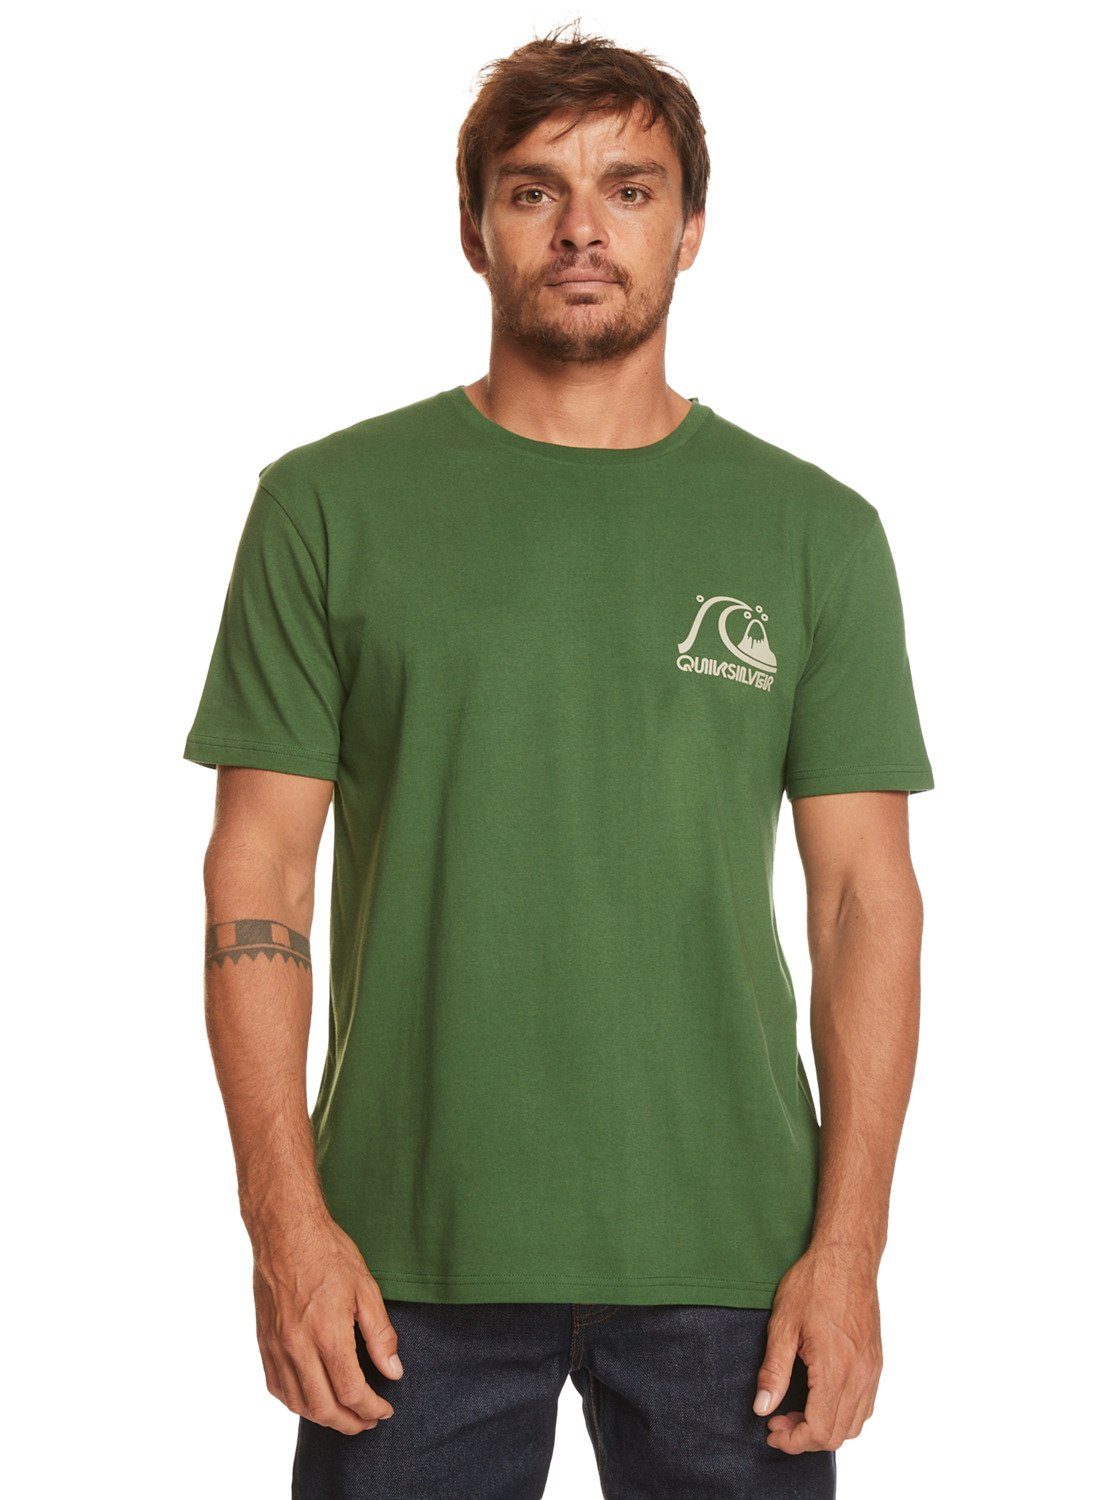 Quiksilver T-Shirt The Original Greener Pastures